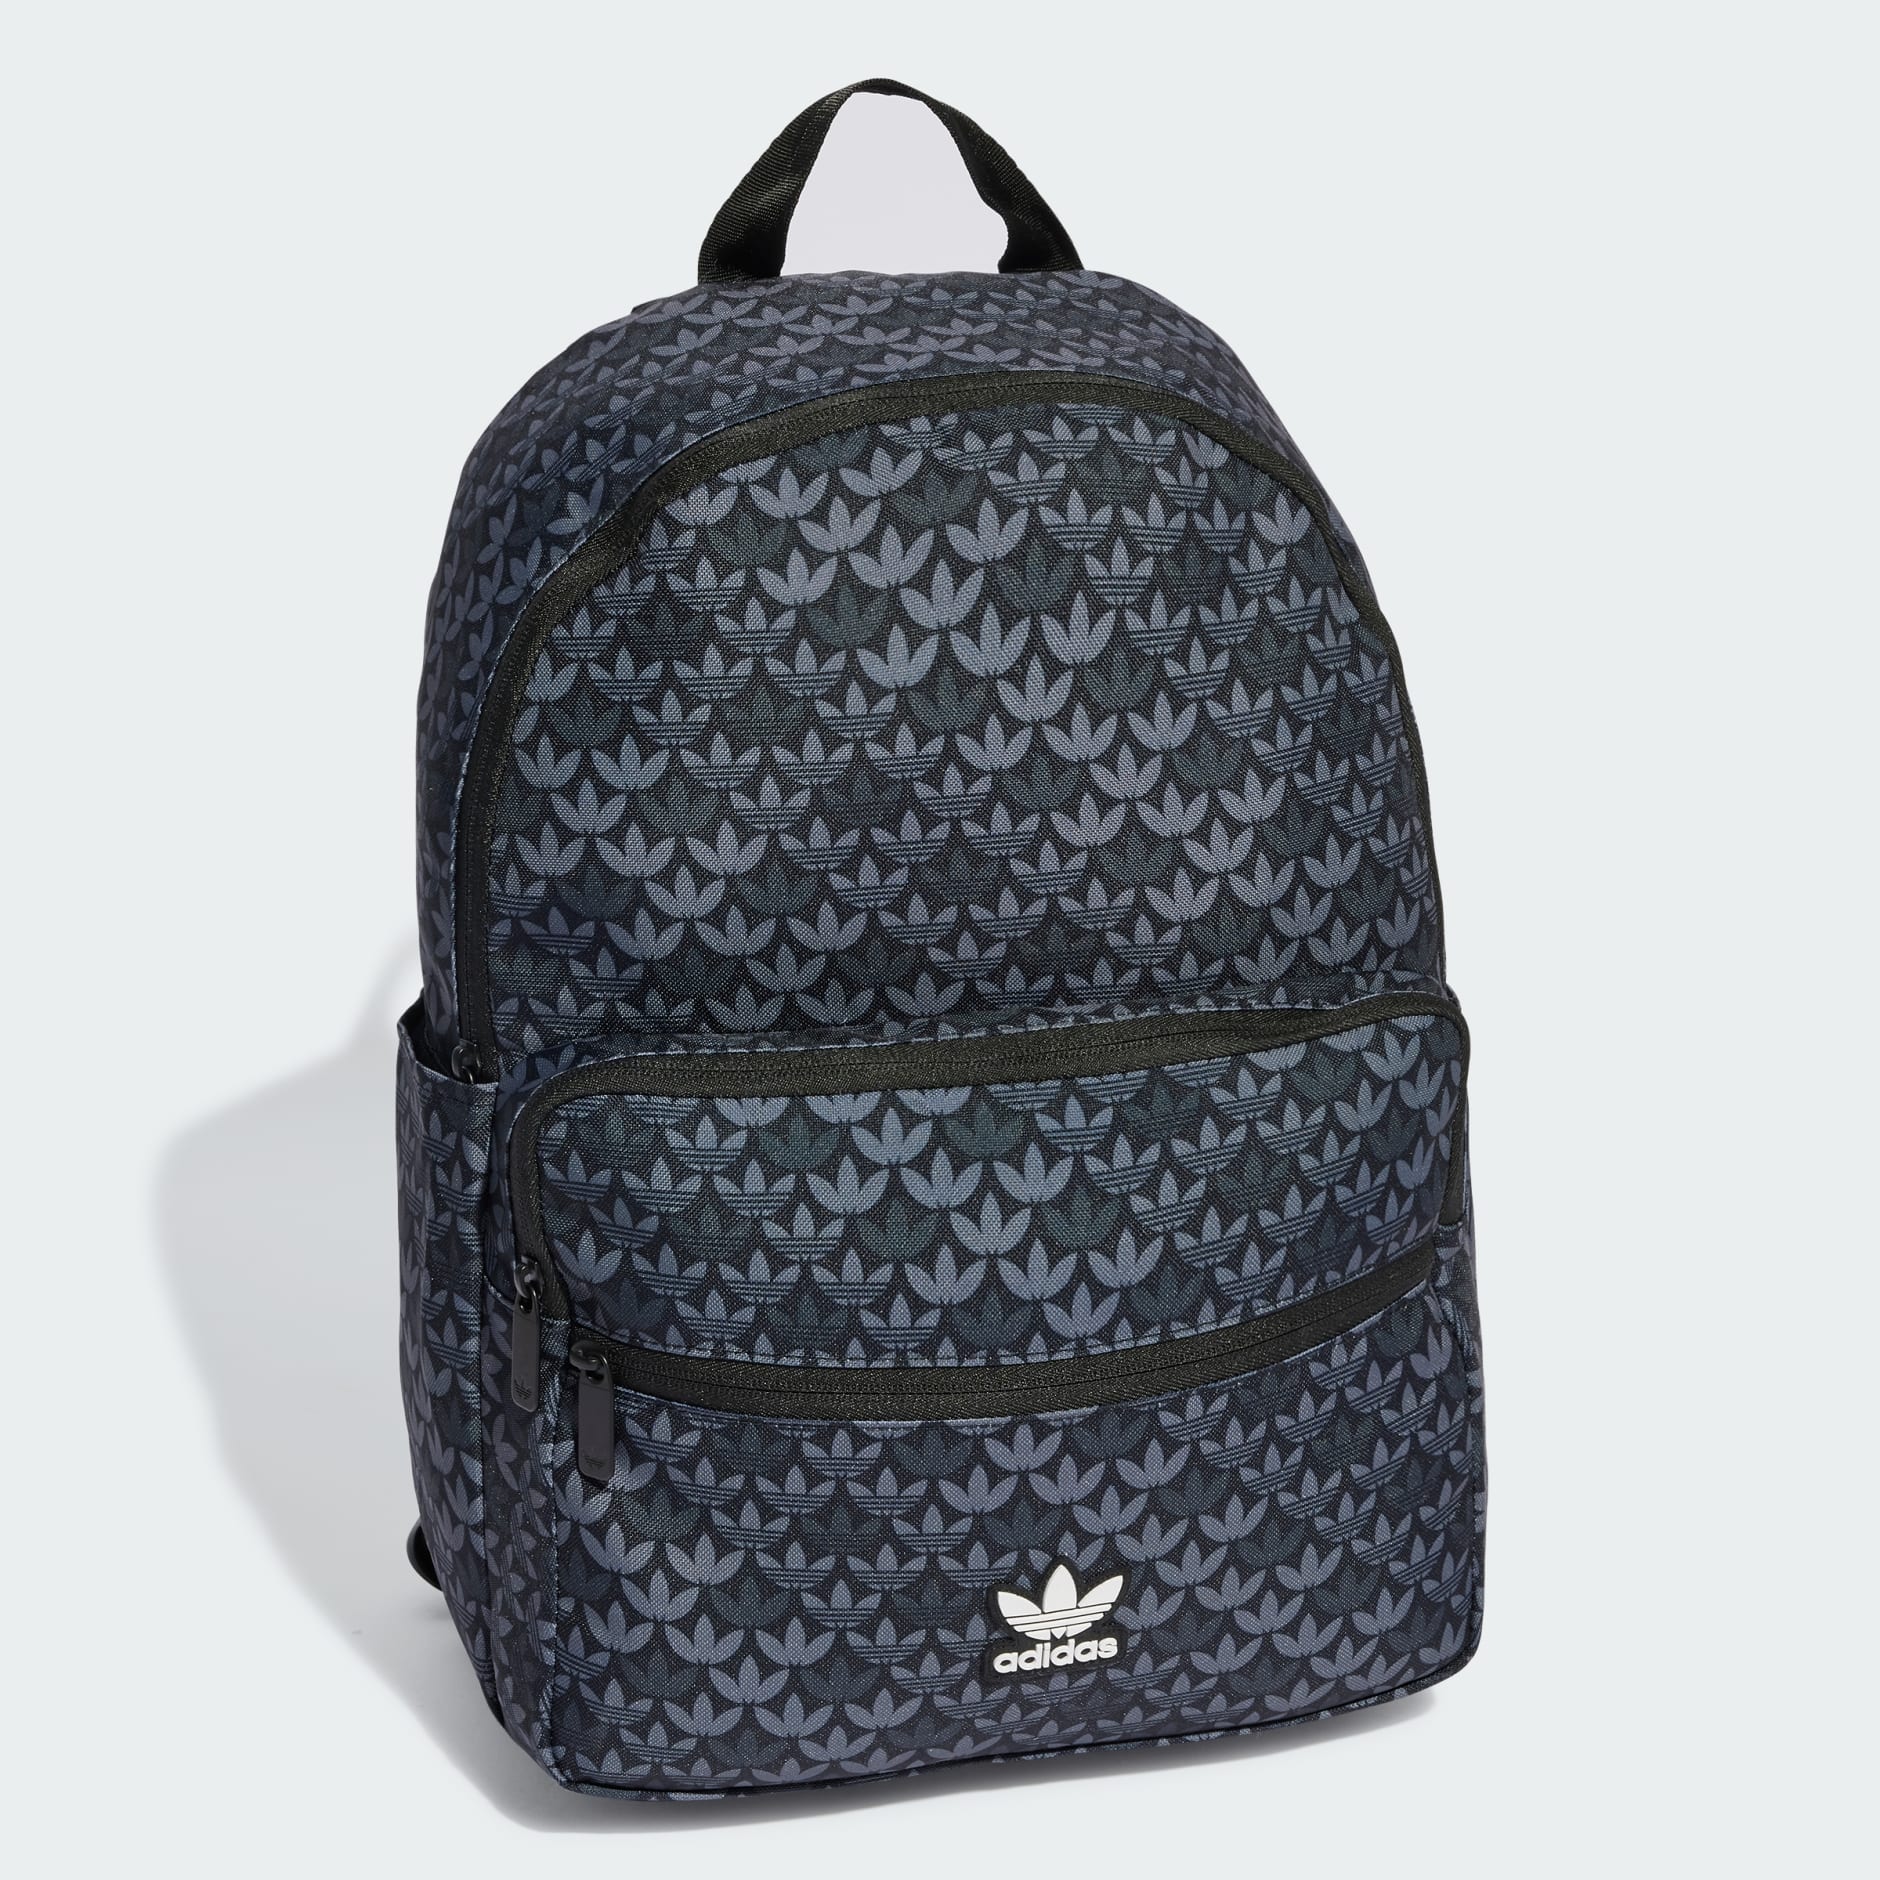 Adidas Men's Alliance Ii Sackpack Sling Backpack Gray Size Regular -  Walmart.com